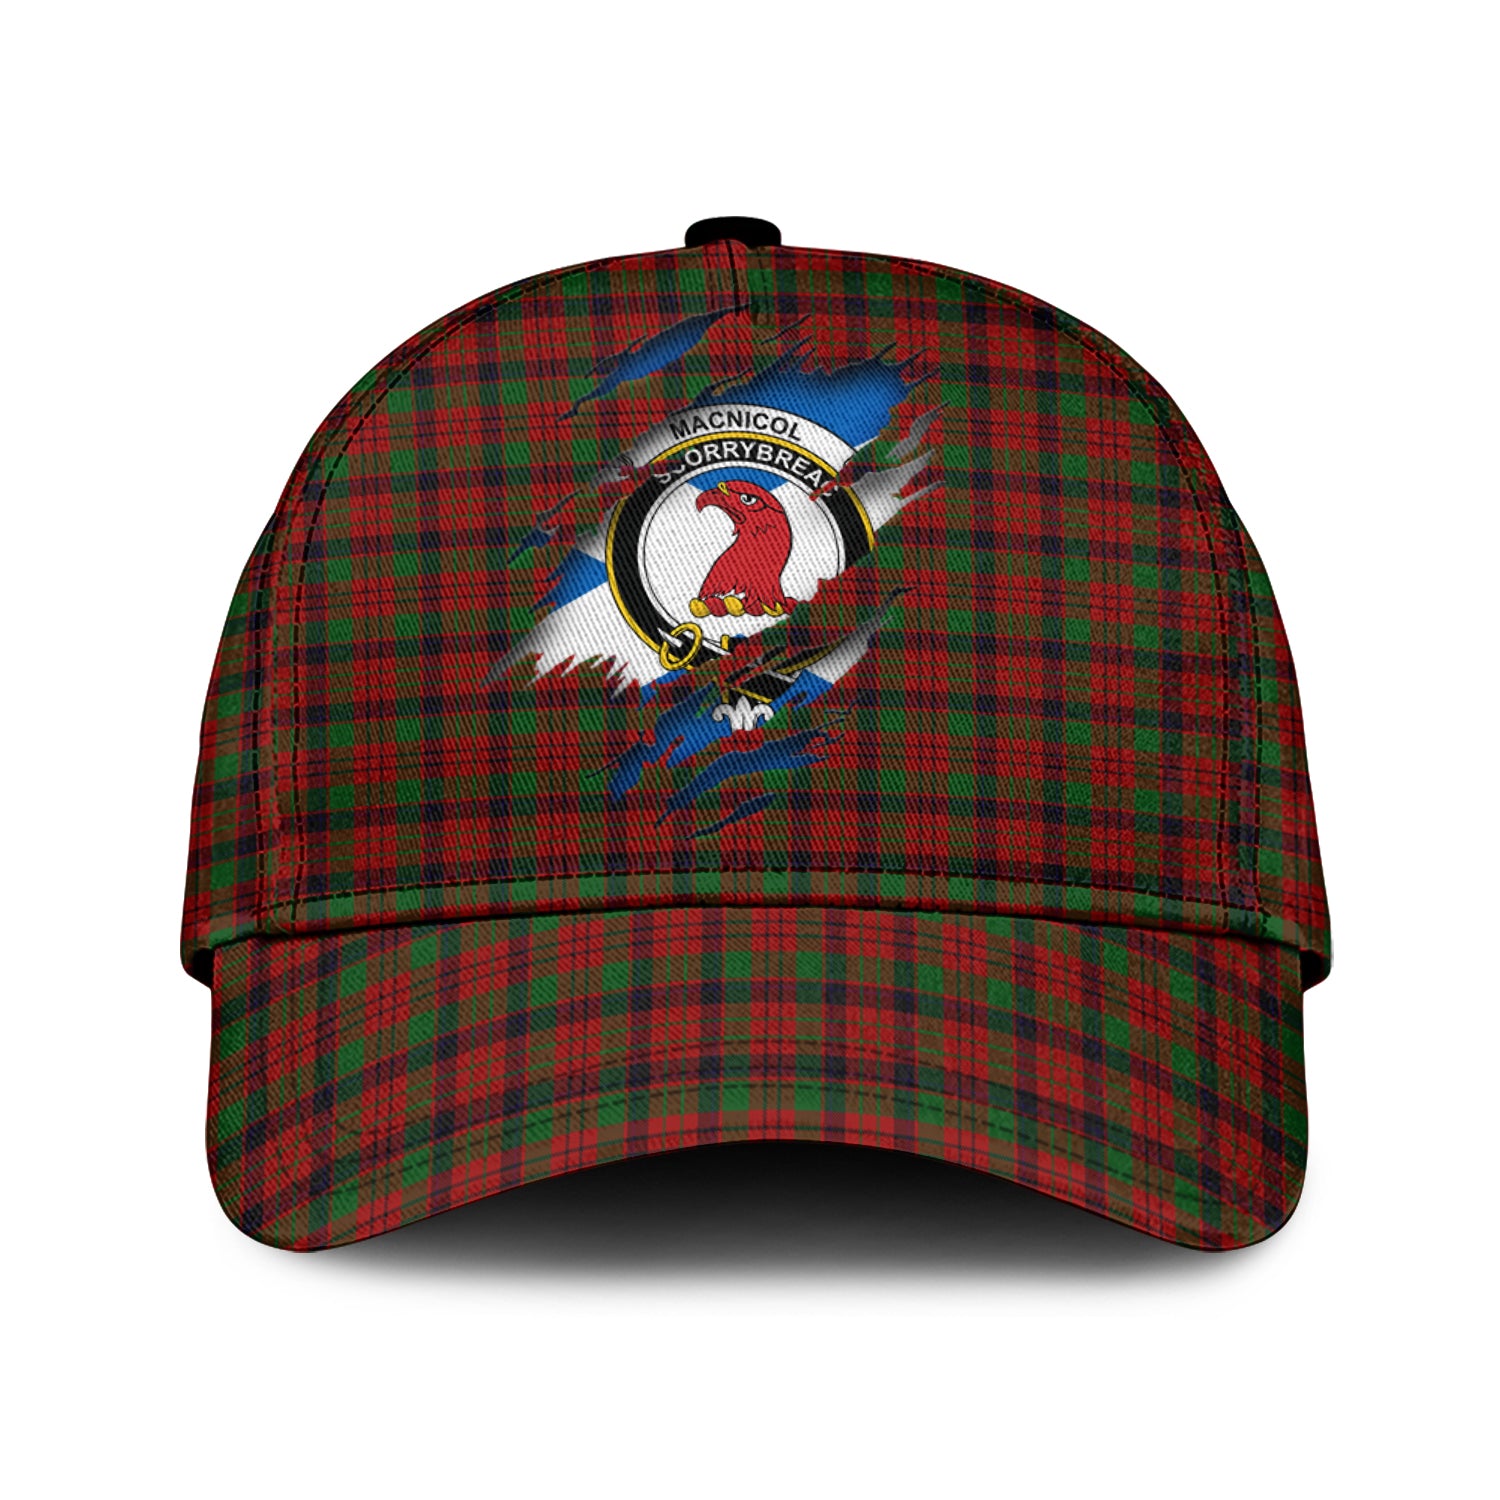 macnicol-tartan-plaid-cap-family-crest-in-me-style-tartan-baseball-cap